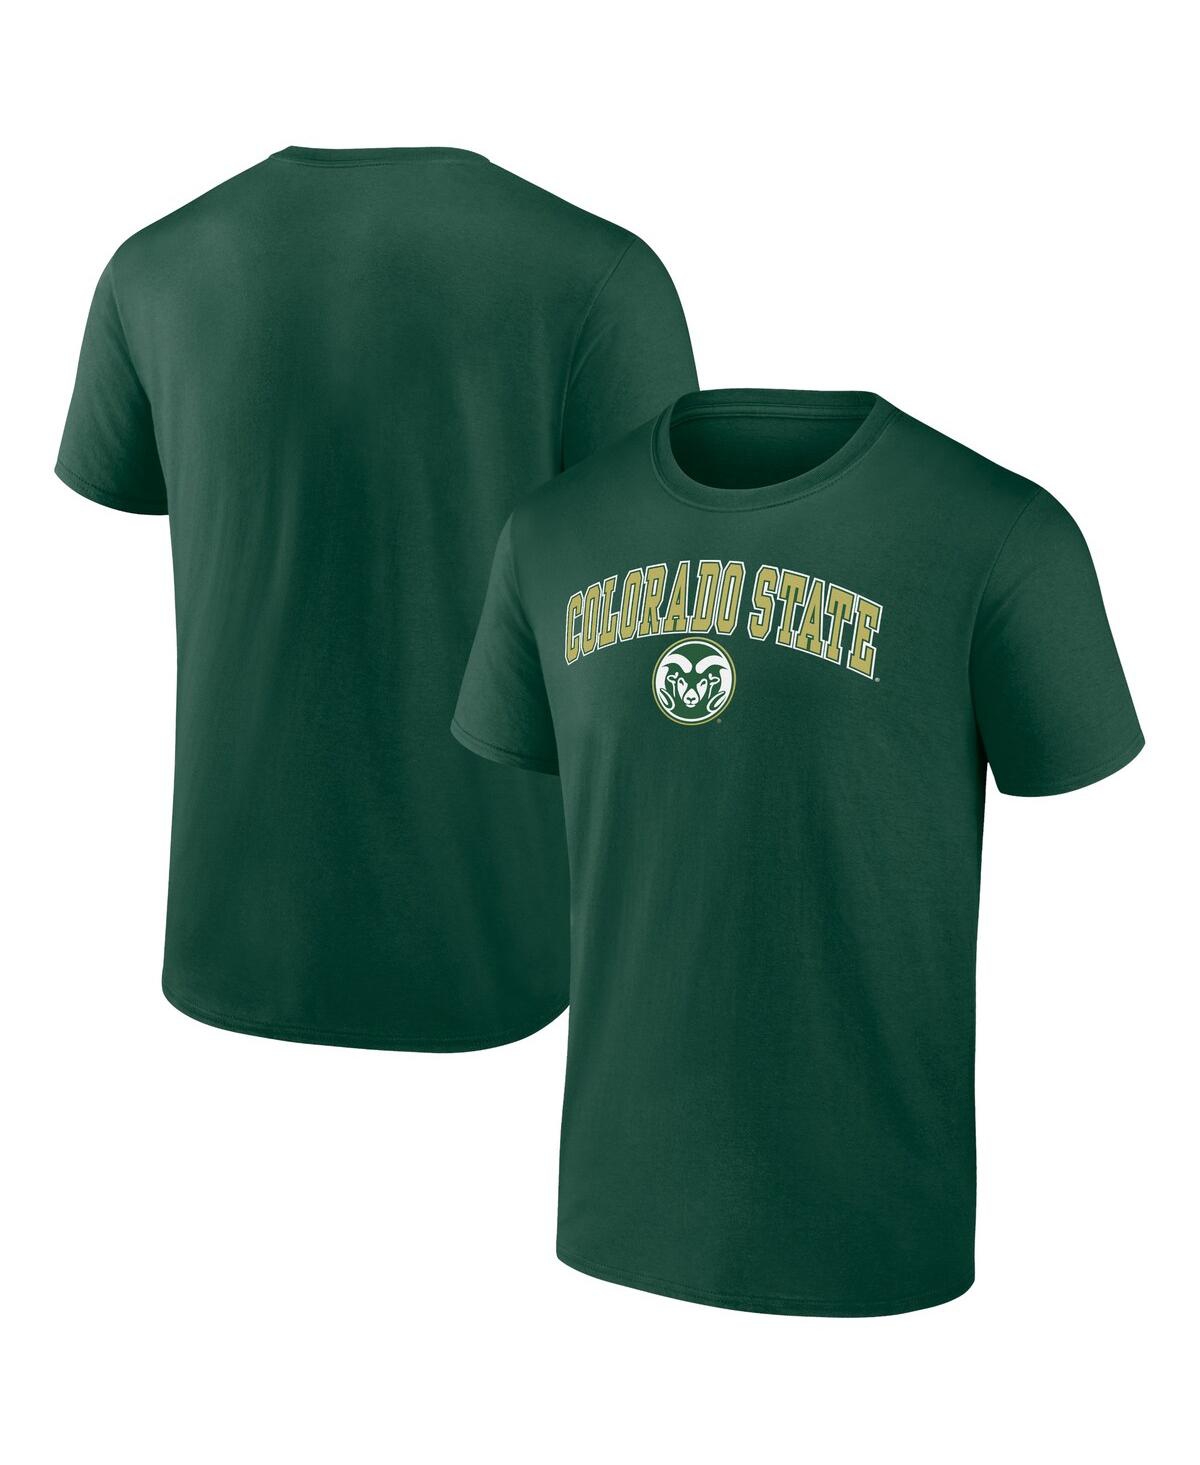 Fanatics Men's  Green Colorado State Rams Campus T-shirt